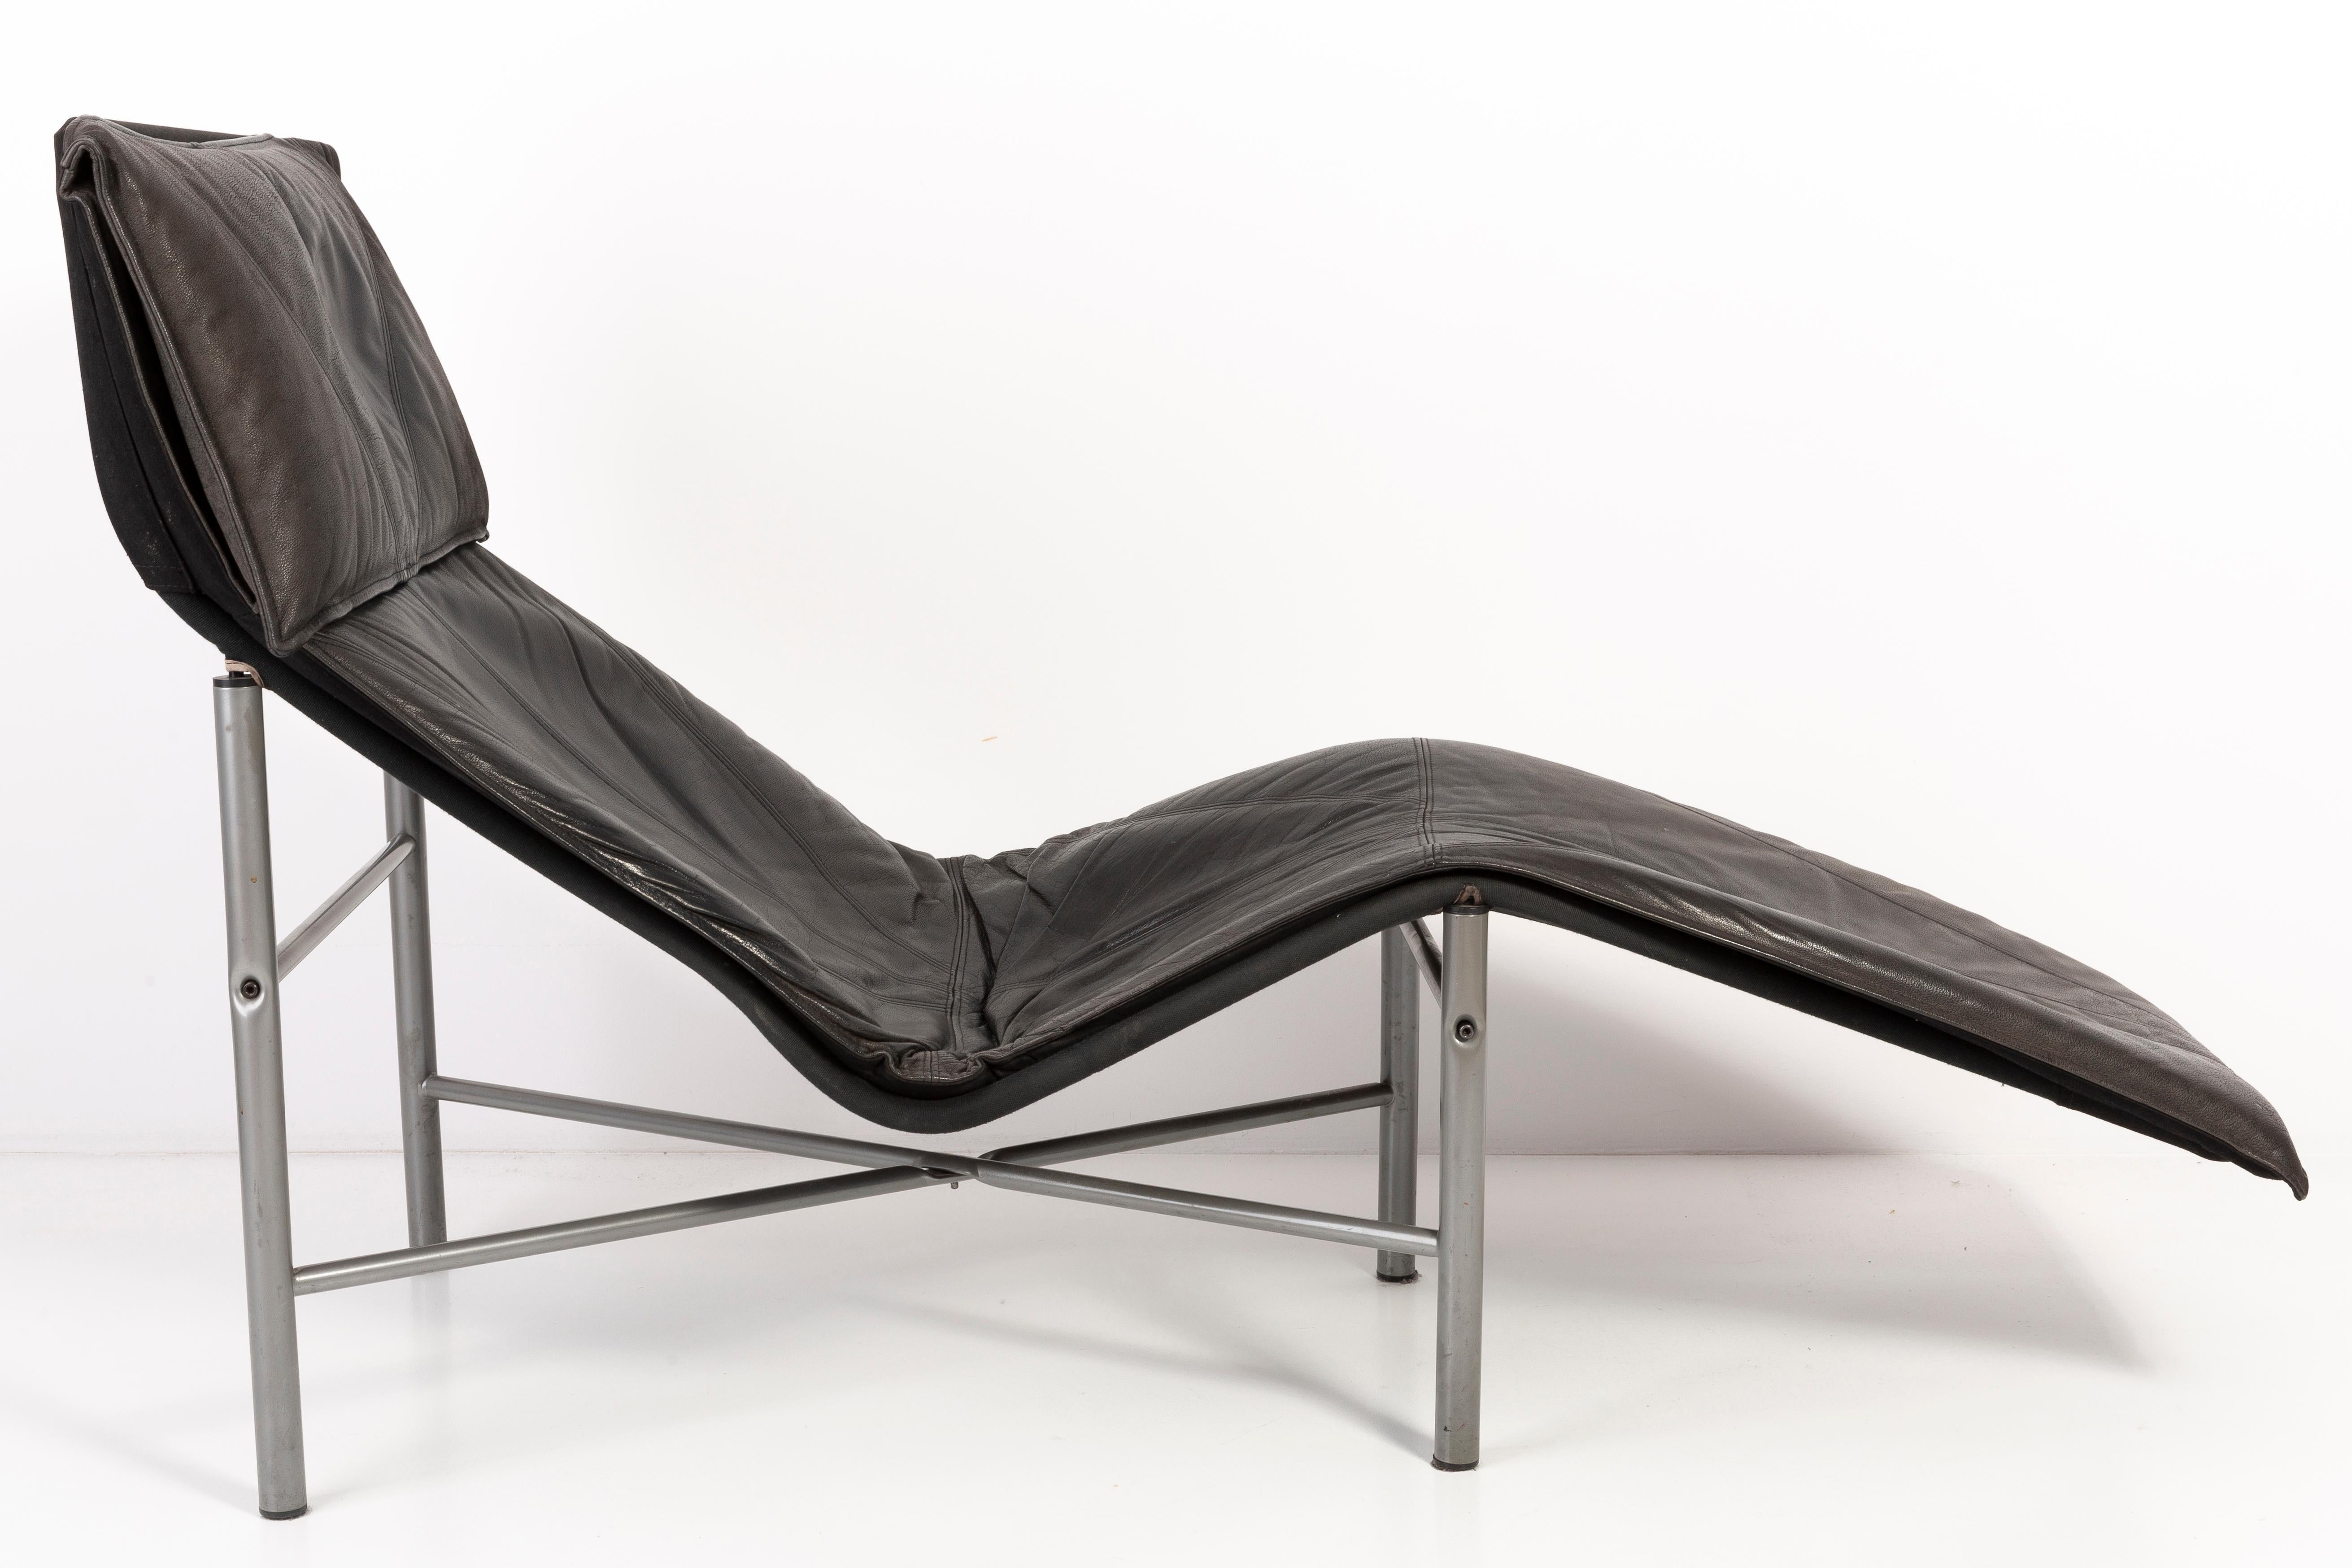 20th Century Midcentury Danish Modern Black Leather Chaise Lounge Chair by Tord Björklund